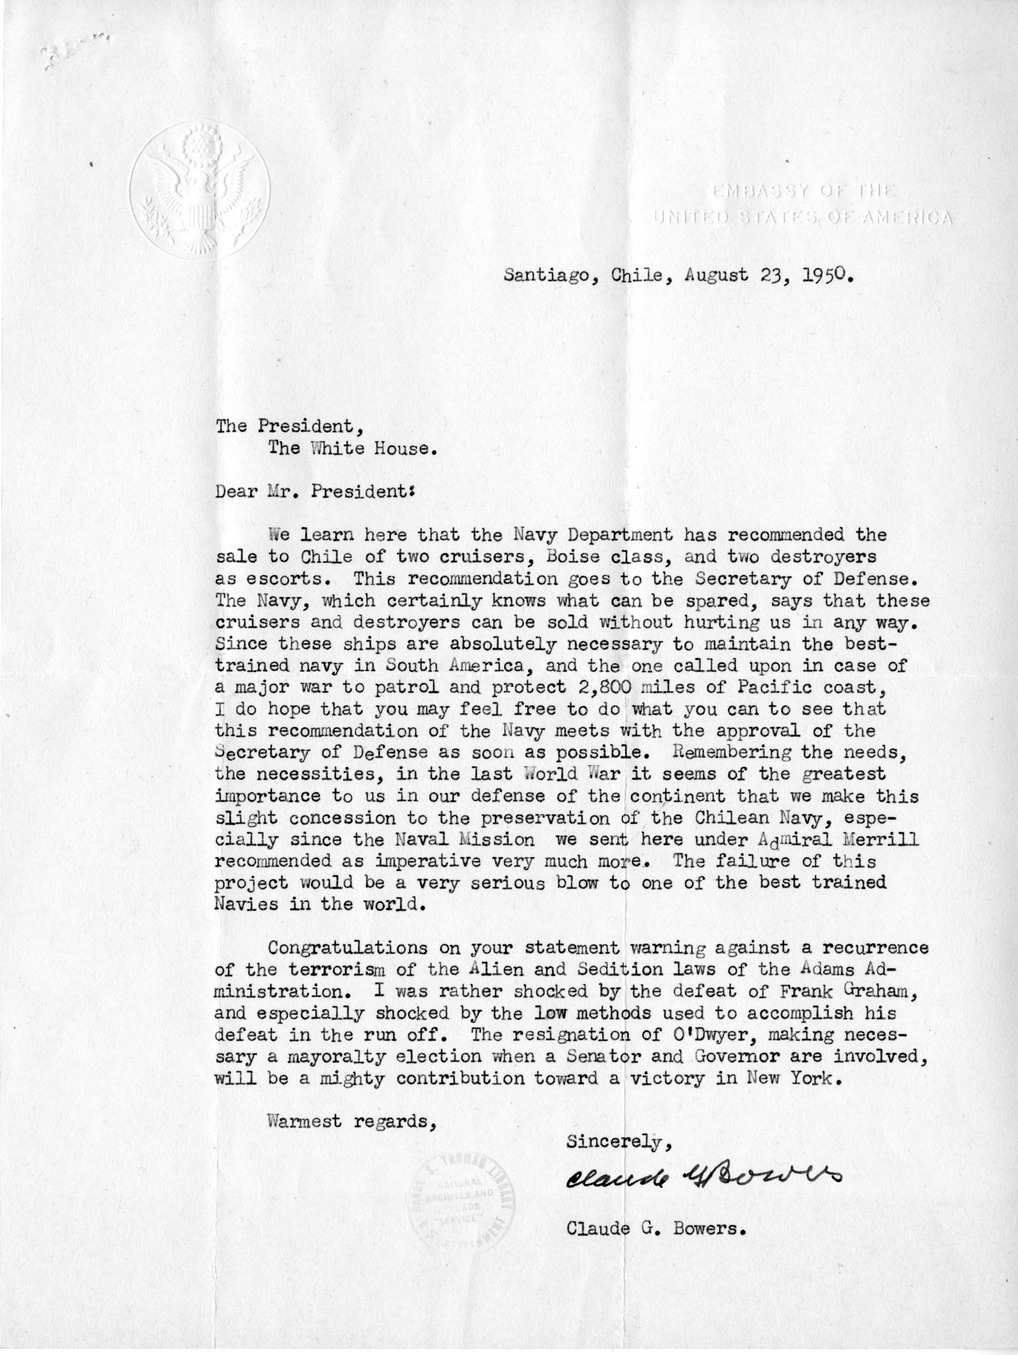 Correspondence Between President Harry S. Truman and Ambassador Claude Bowers